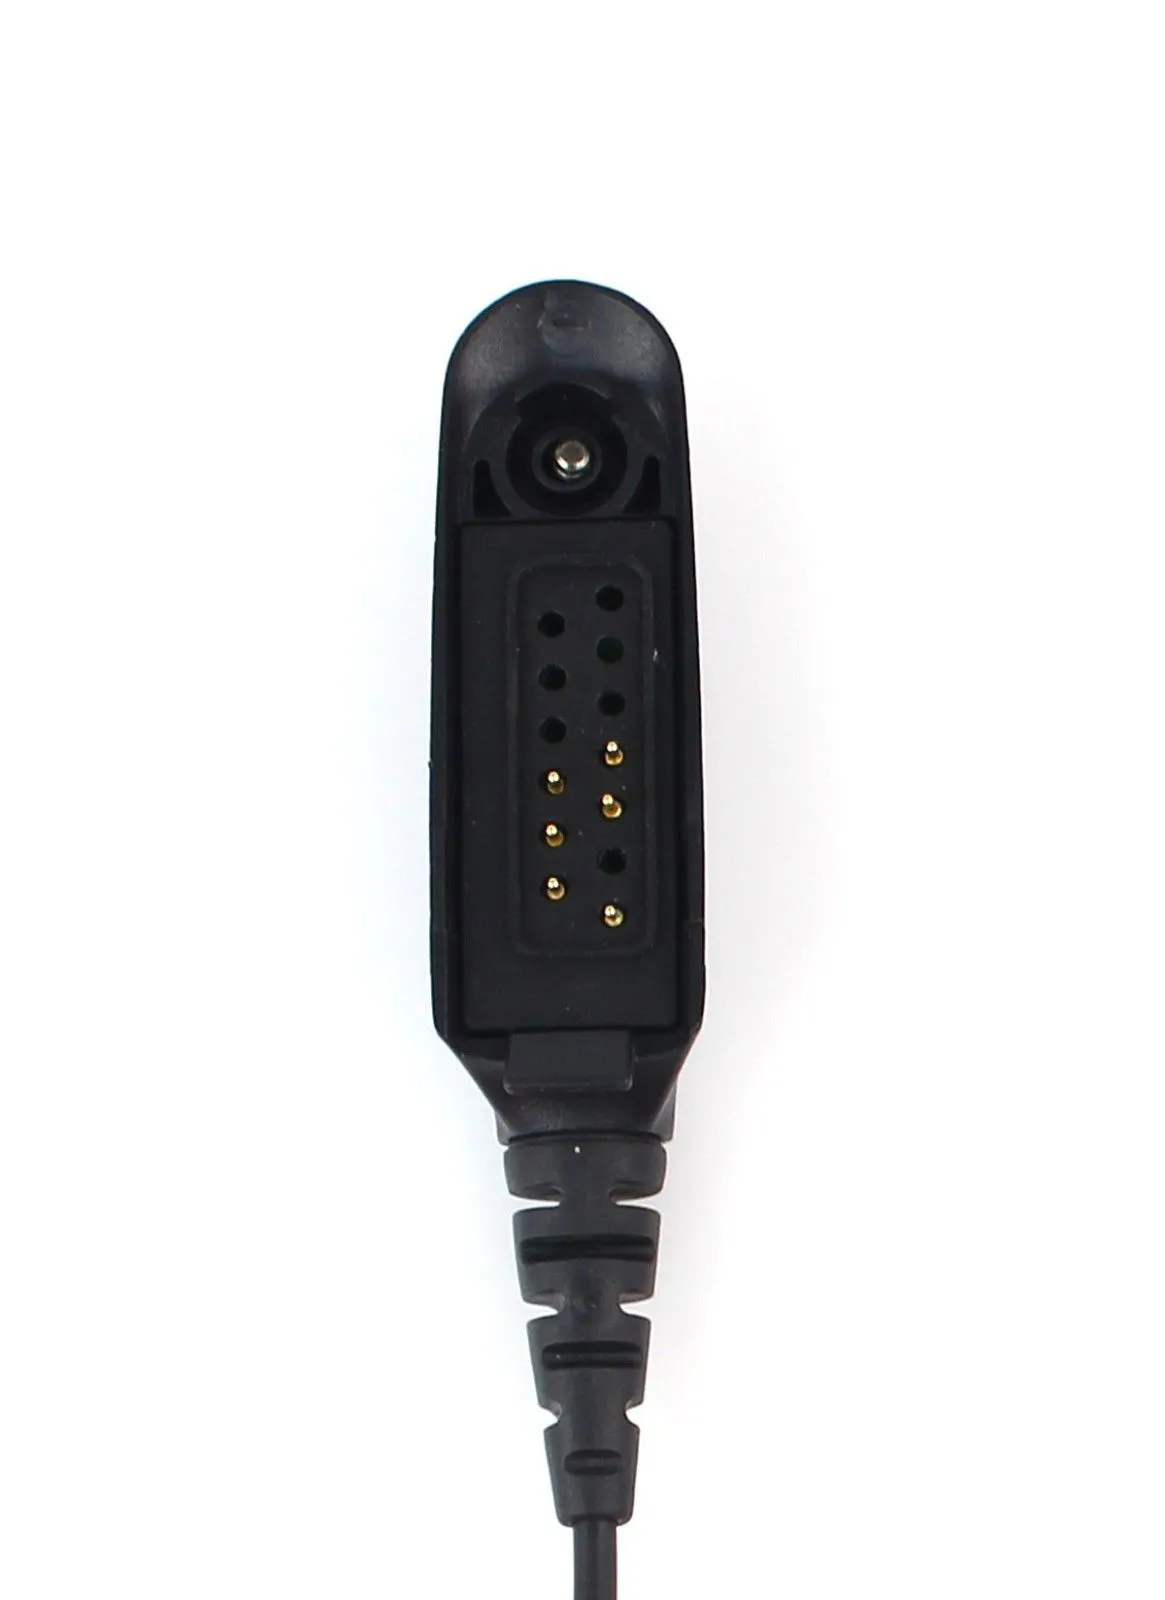 VOX PTT Earpiece Headset MIC for Motorola HT750 GP328 GP329/340 GP380 Radios